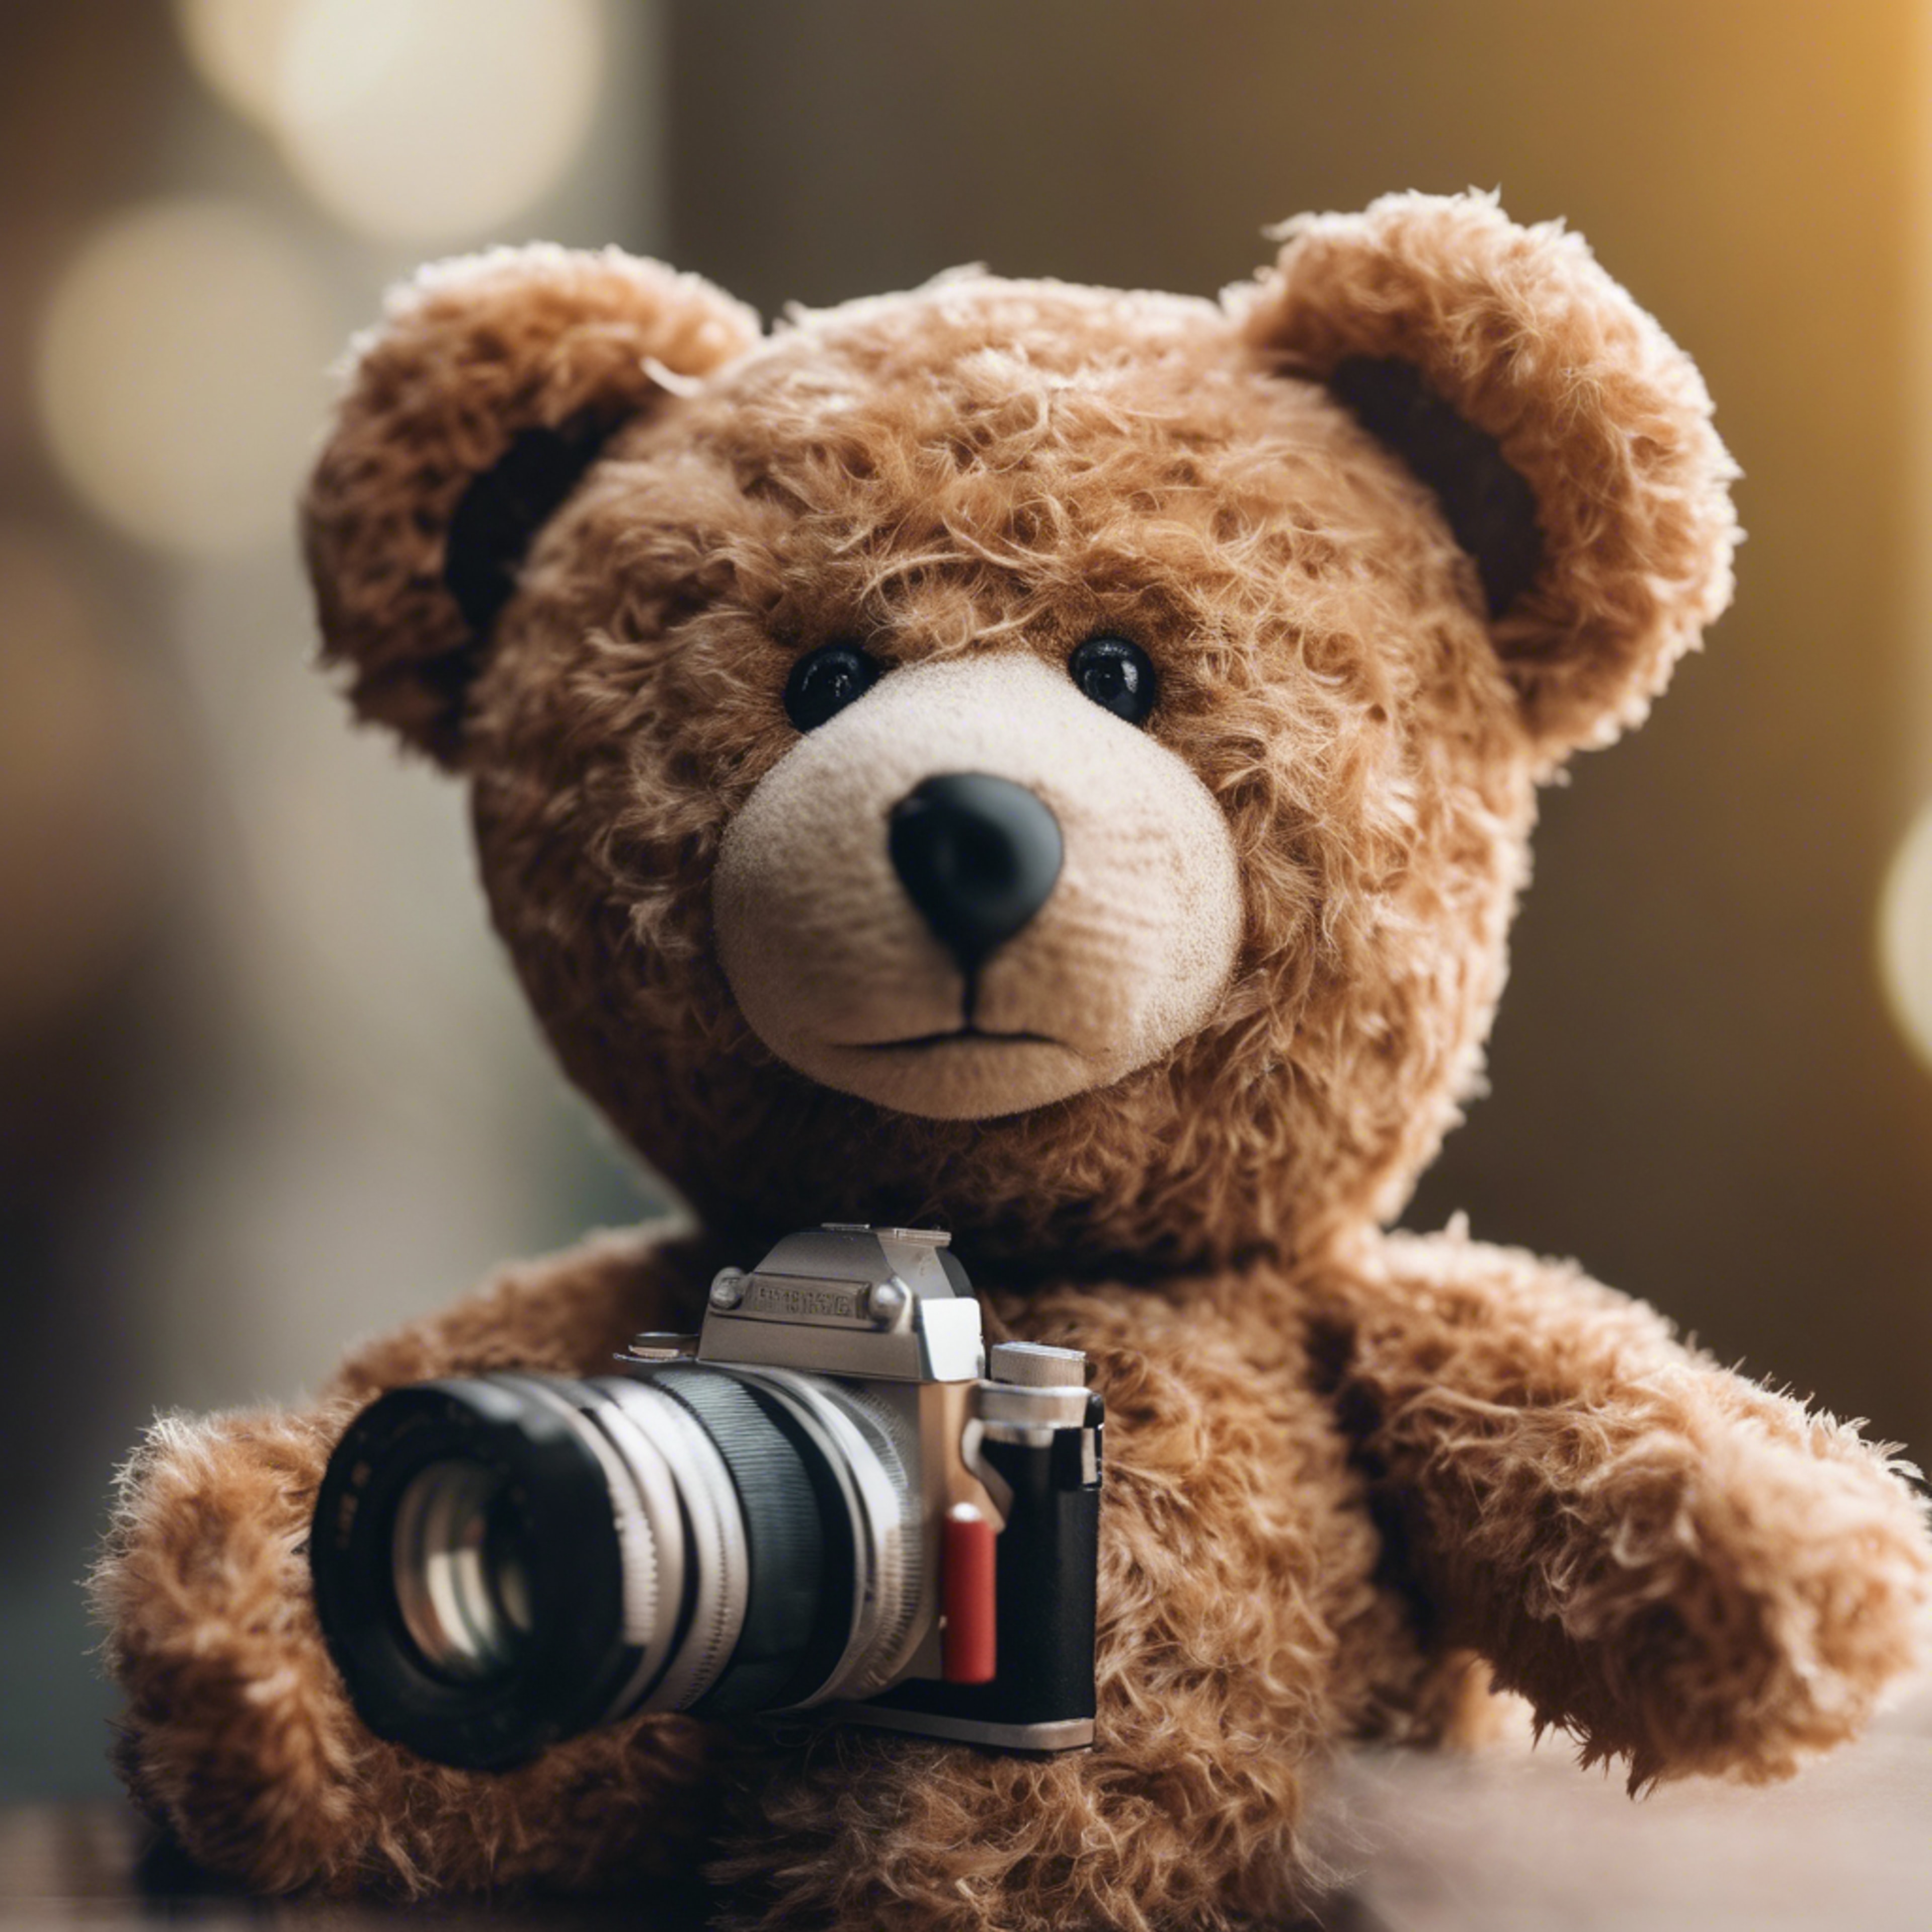 A teddy bear with a small plaster on its arm.壁紙[4c339751e50148d7ba00]